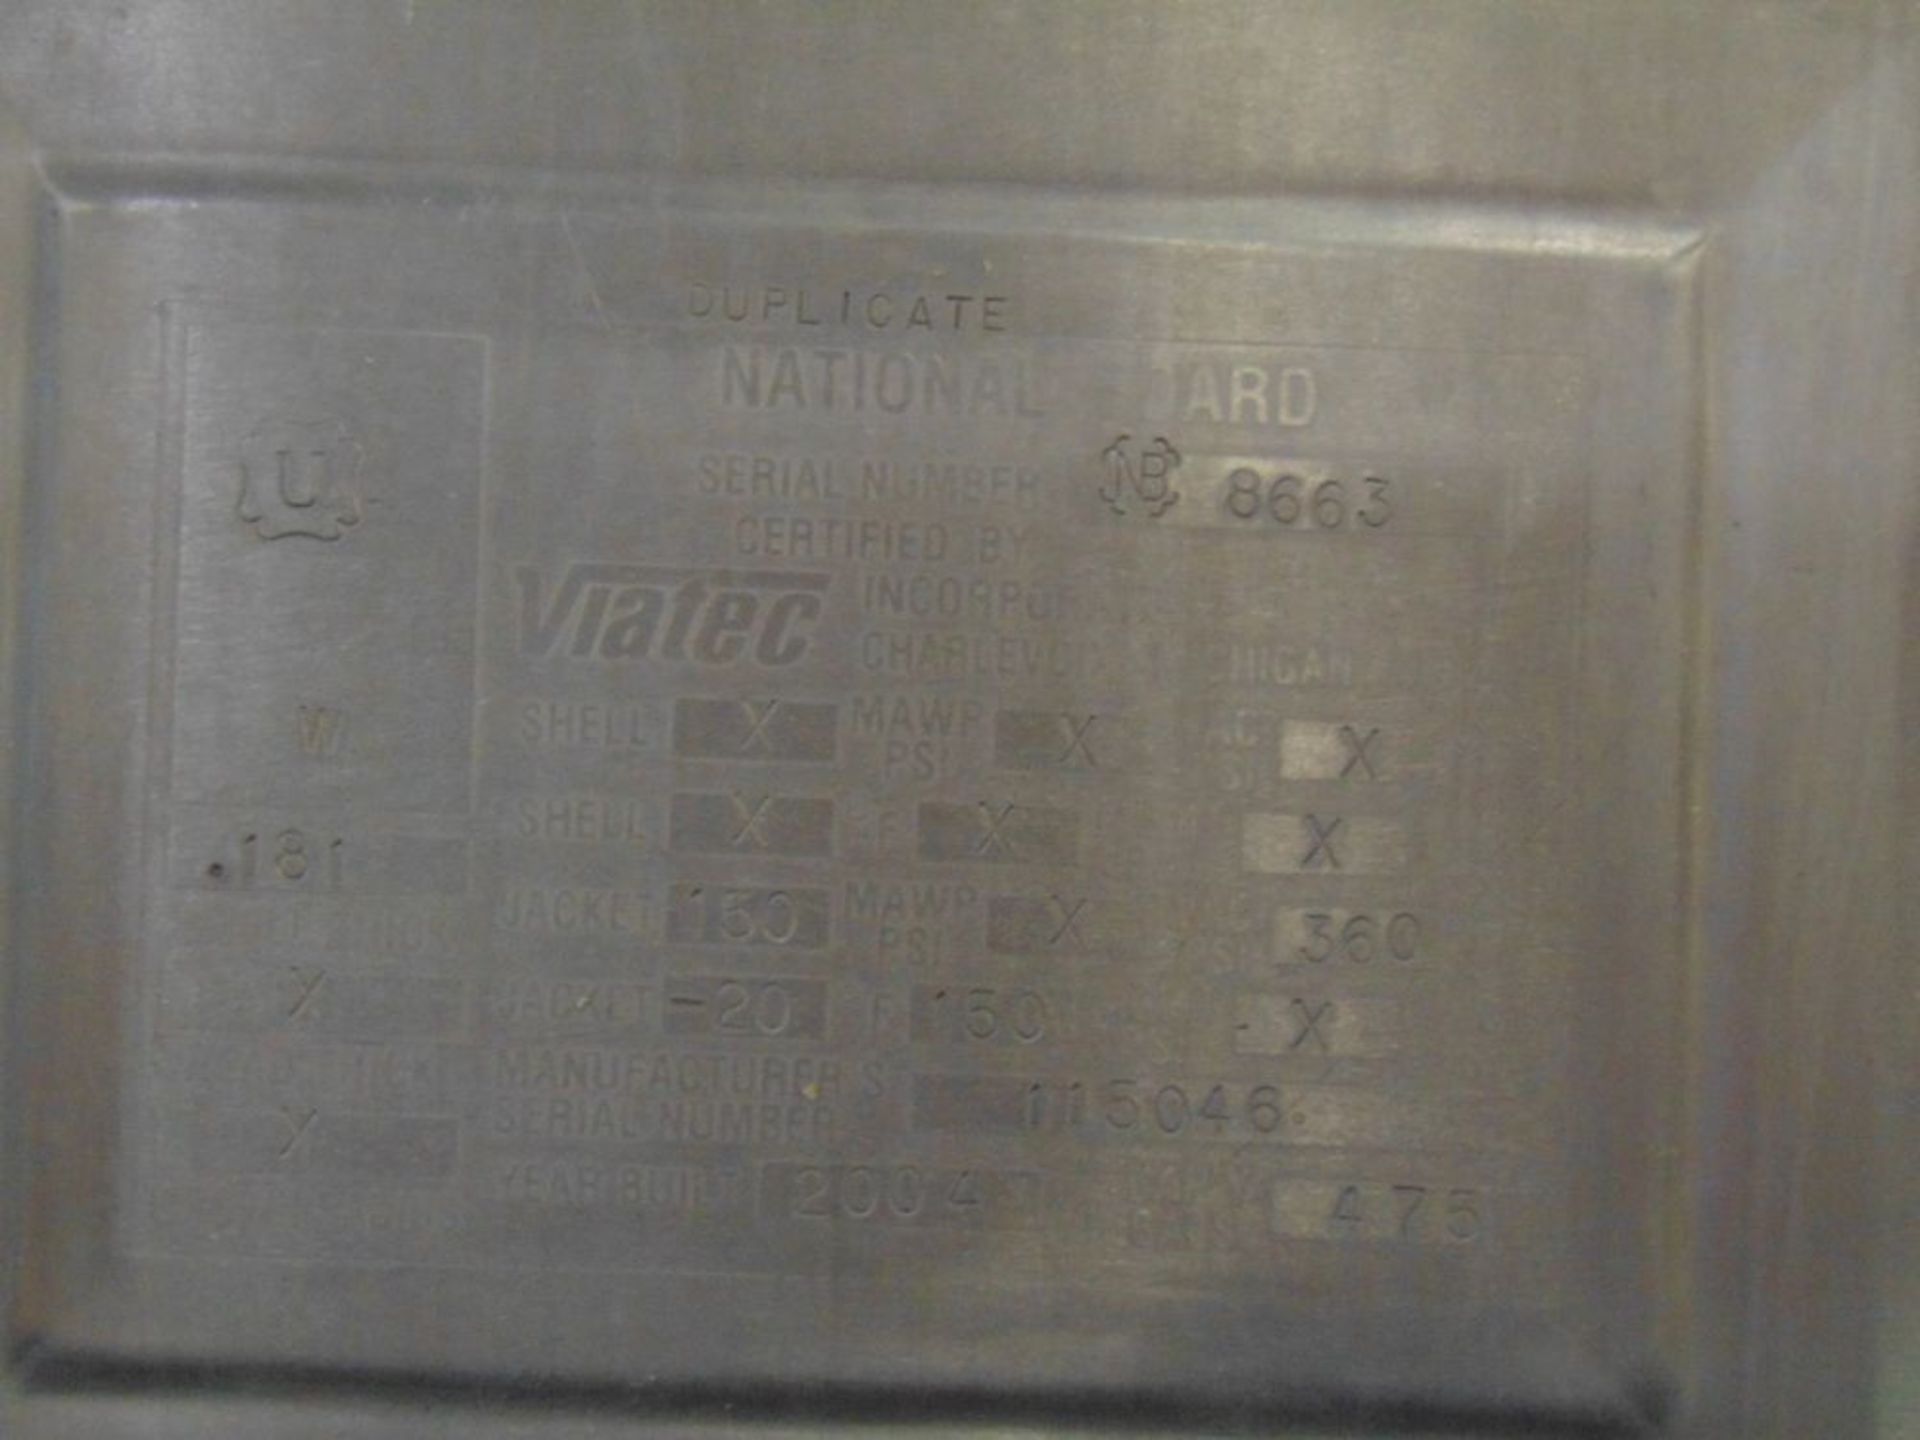 (2004) Viatec Natl #8663, 475 Gal. Horizontal Cooker, Jacketed Mixing Tank, 150 psi, Scrape Surface - Image 5 of 5